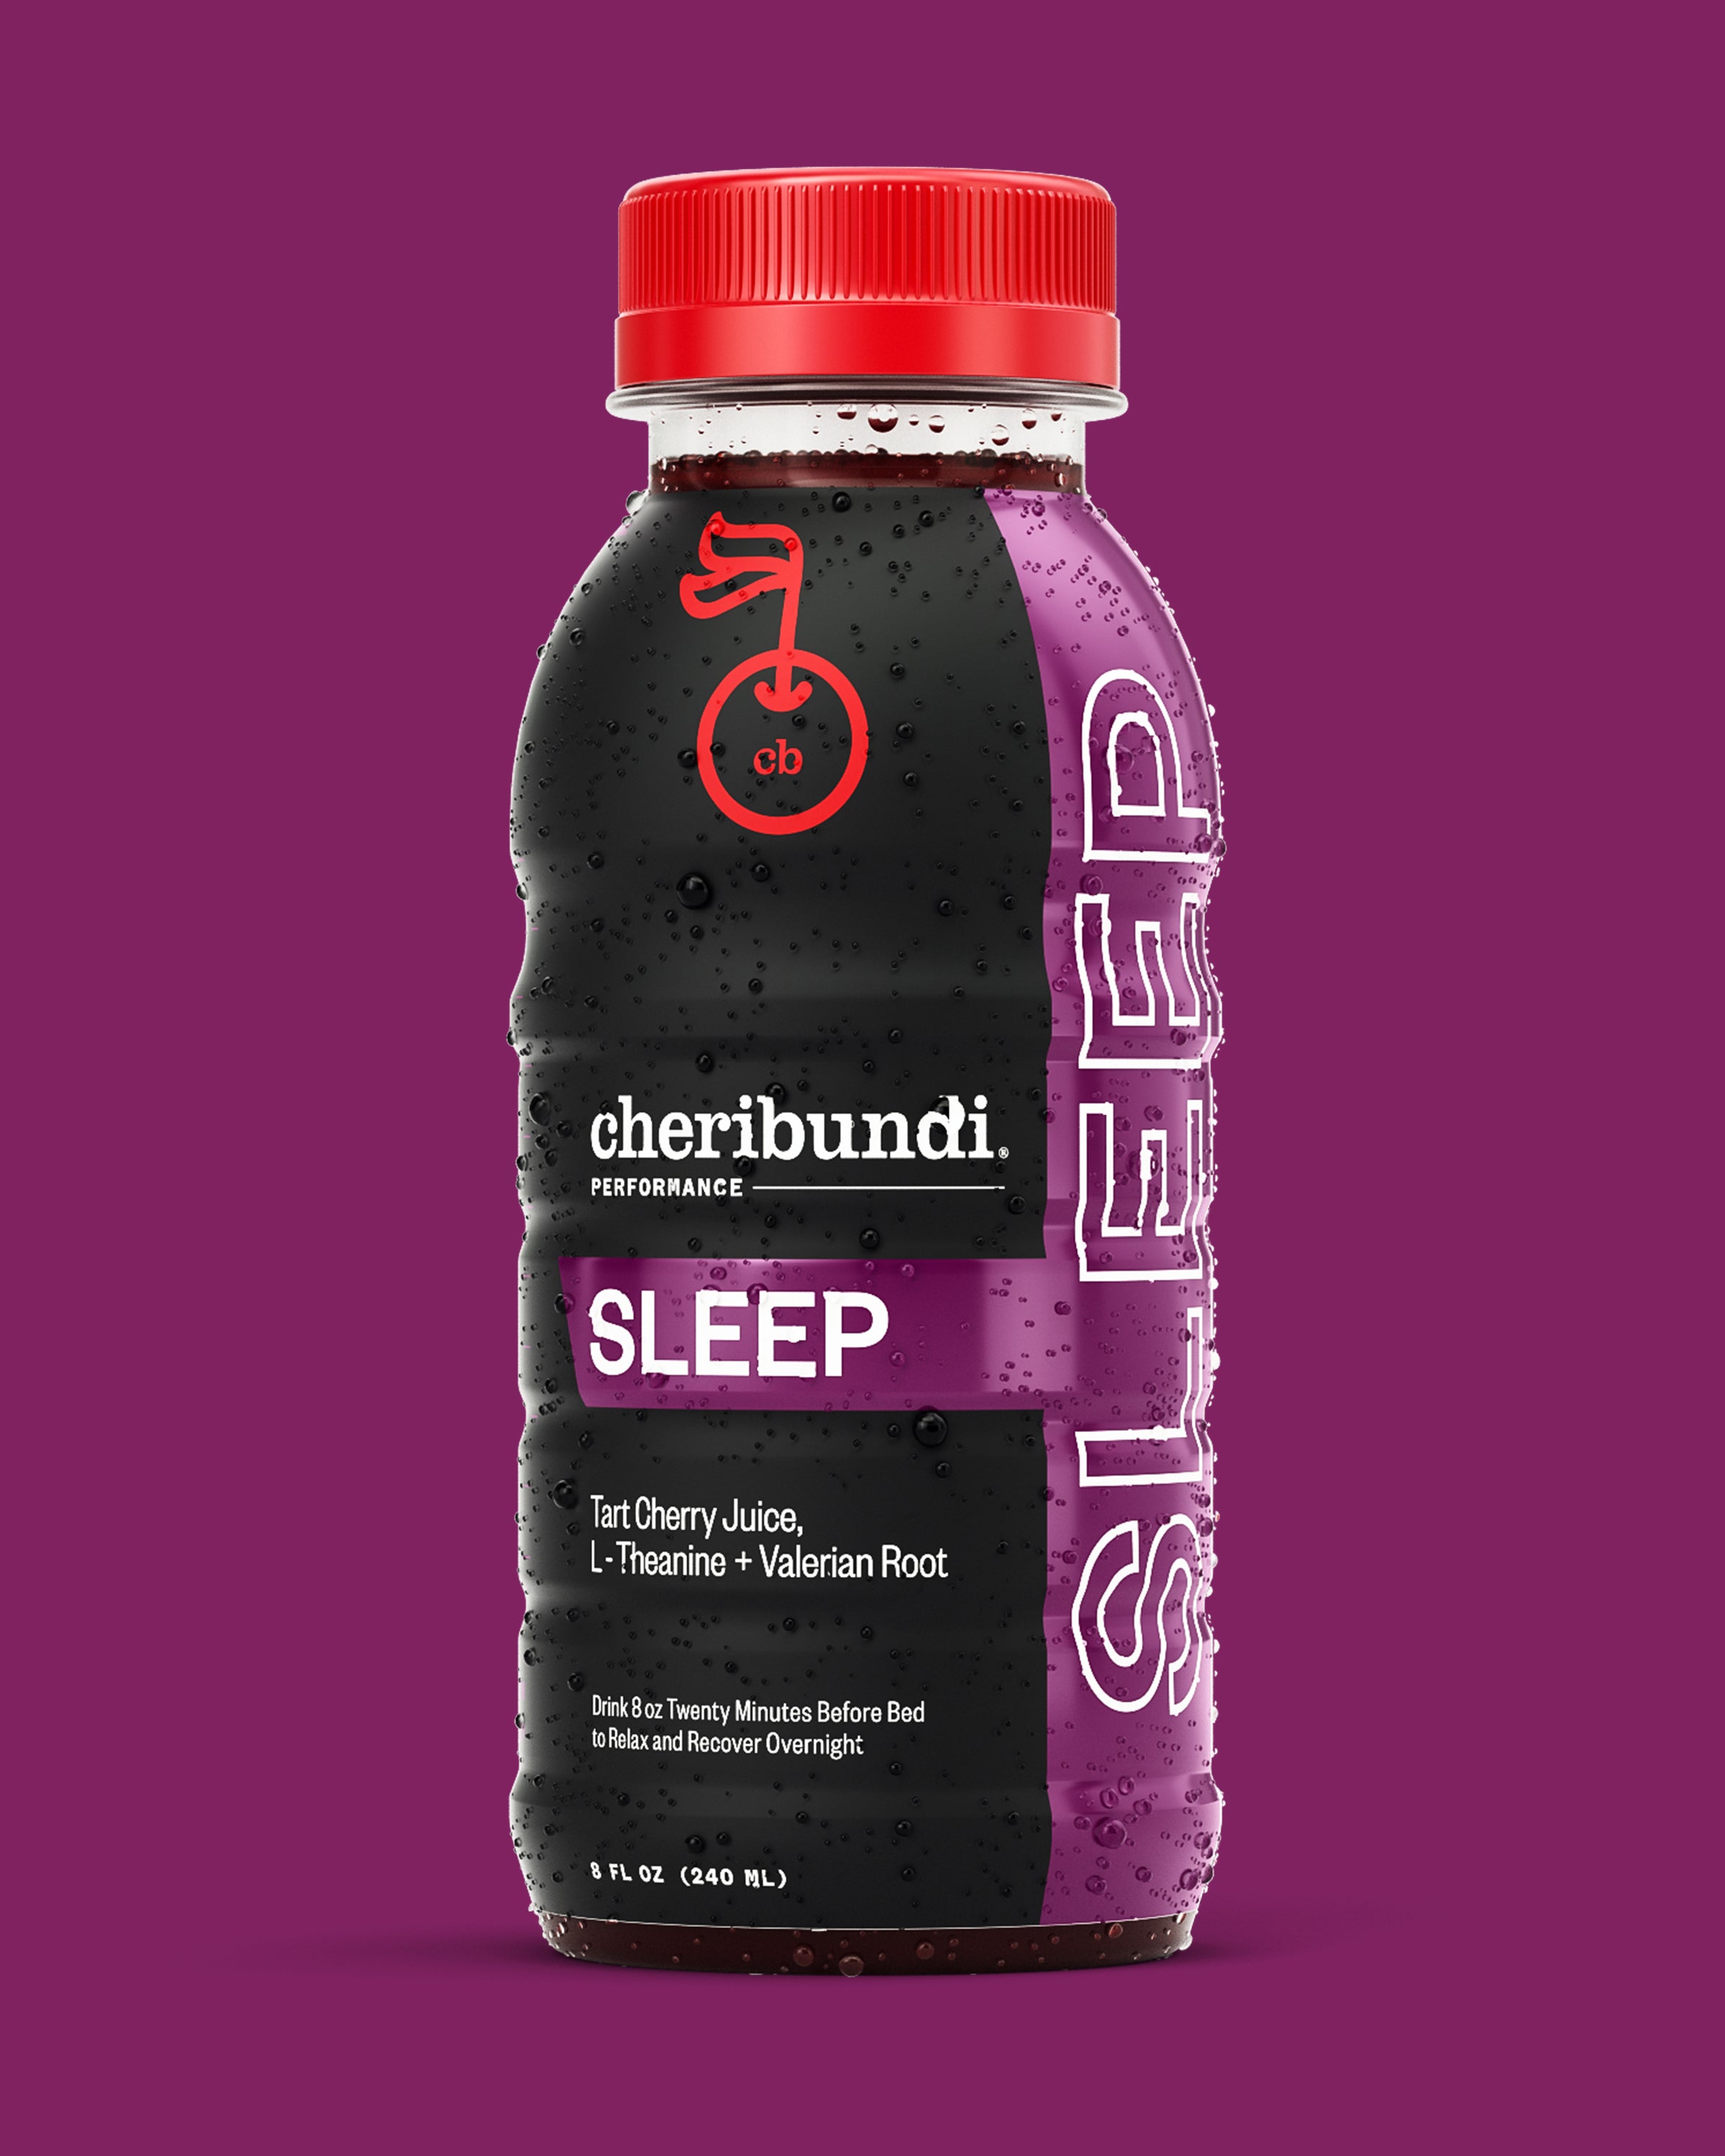 Sleep front packaging. Sour cherry juice sleep, tart cherry juice for sleep, tart cherry juice sleep